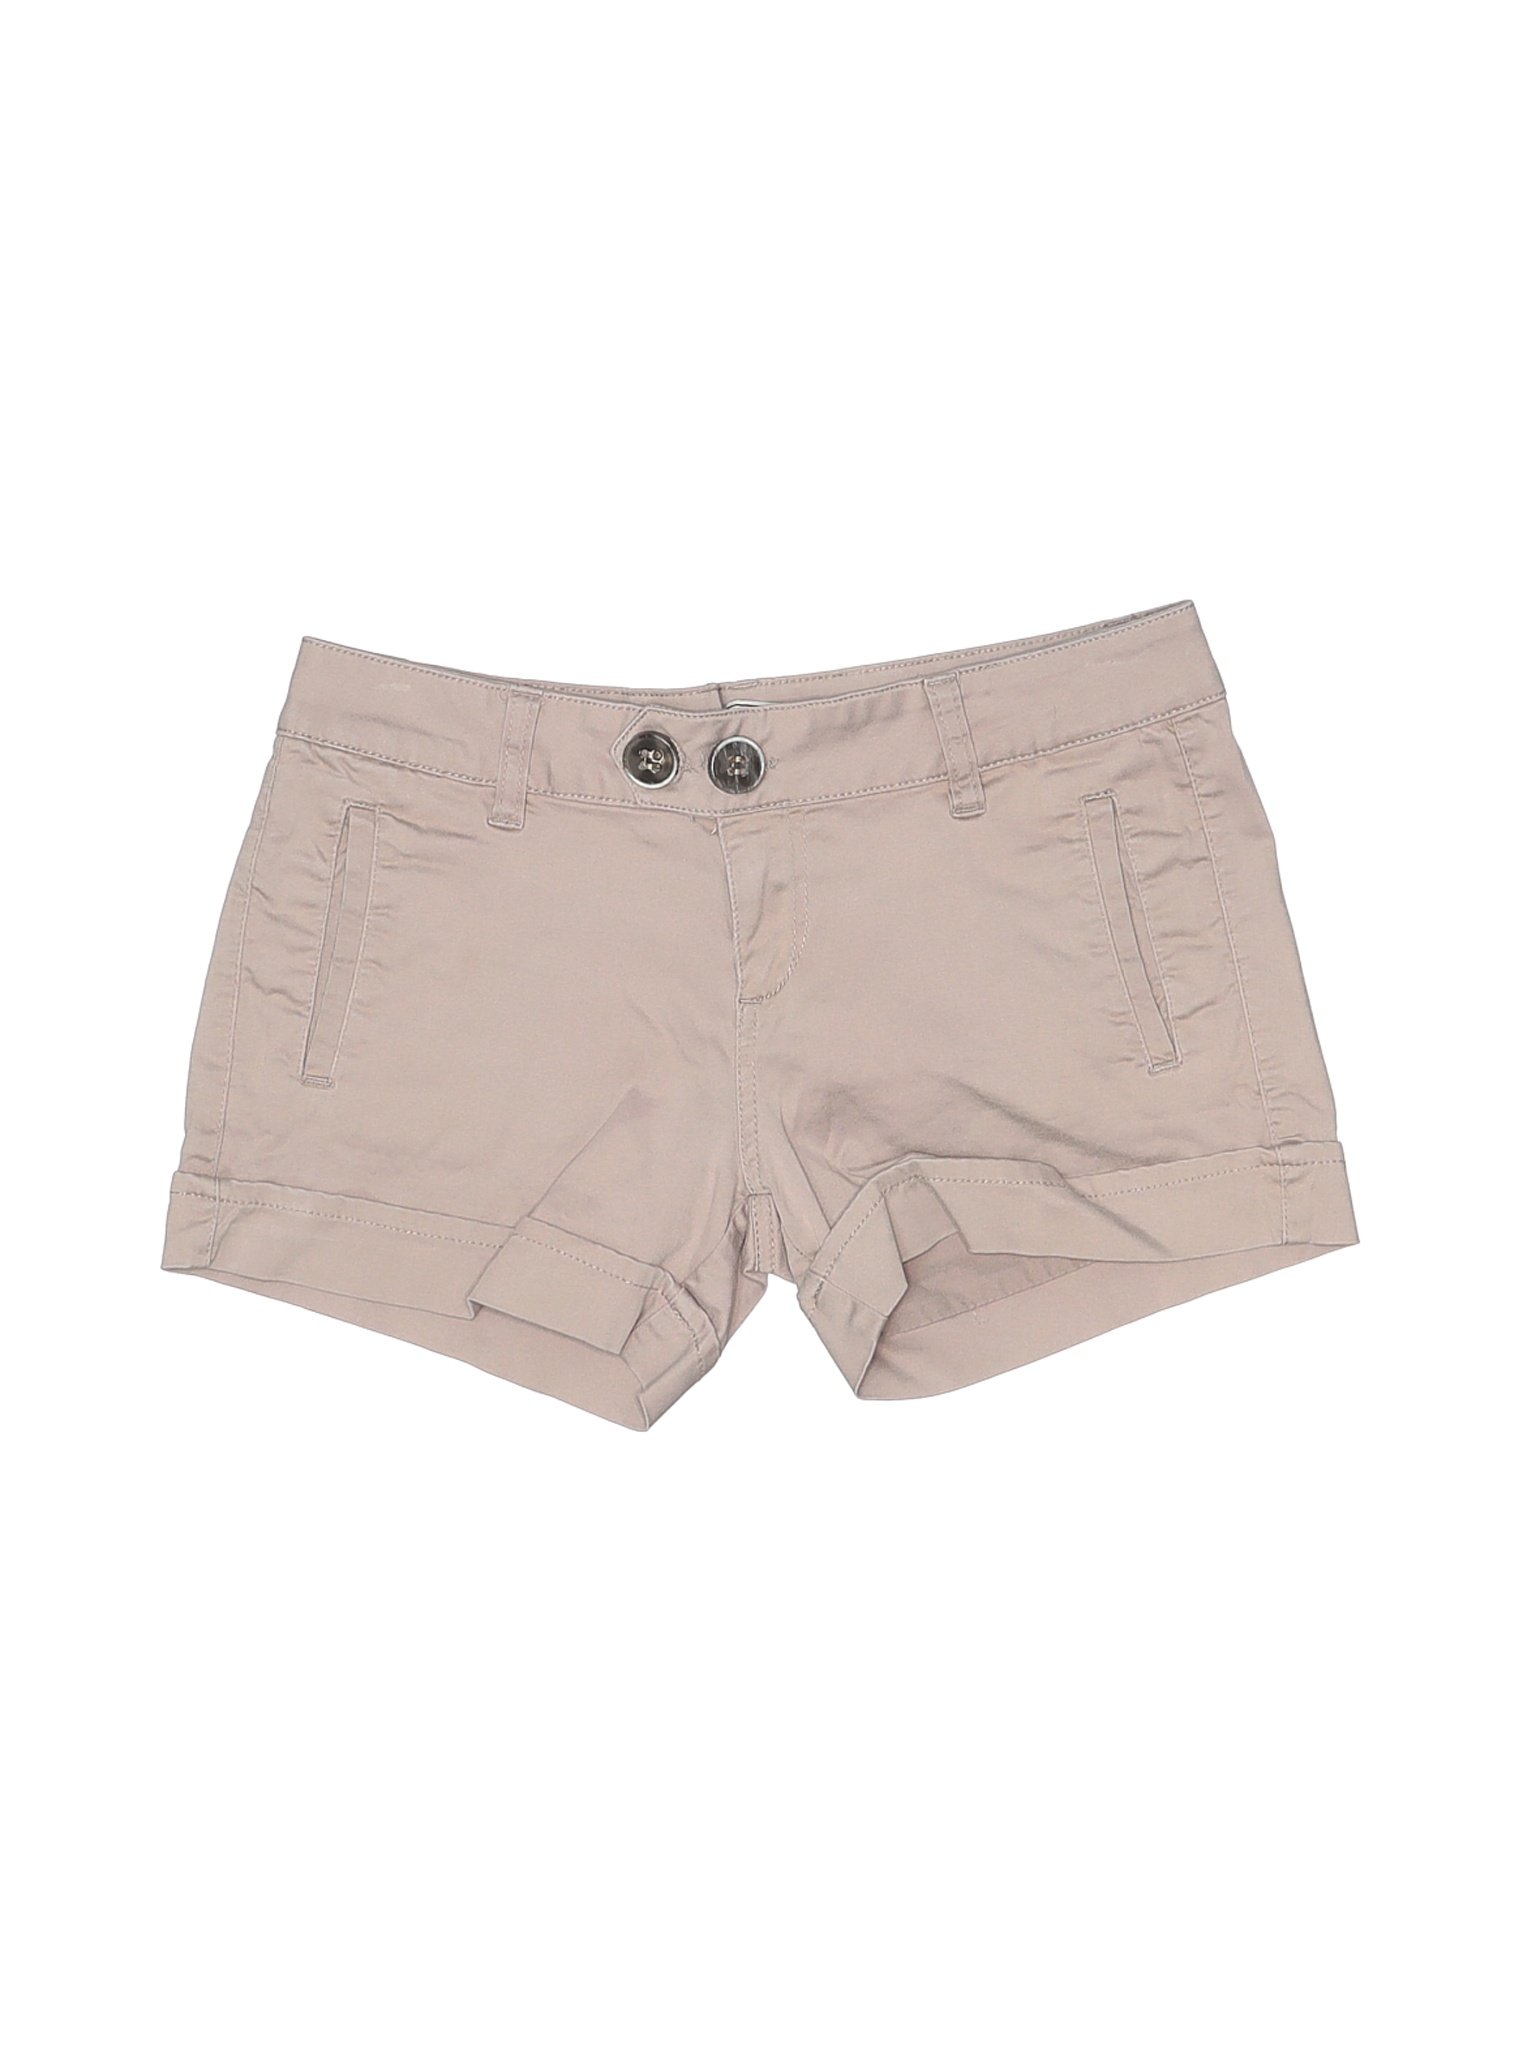 Bershka Women Brown Khaki Shorts 38 french | eBay